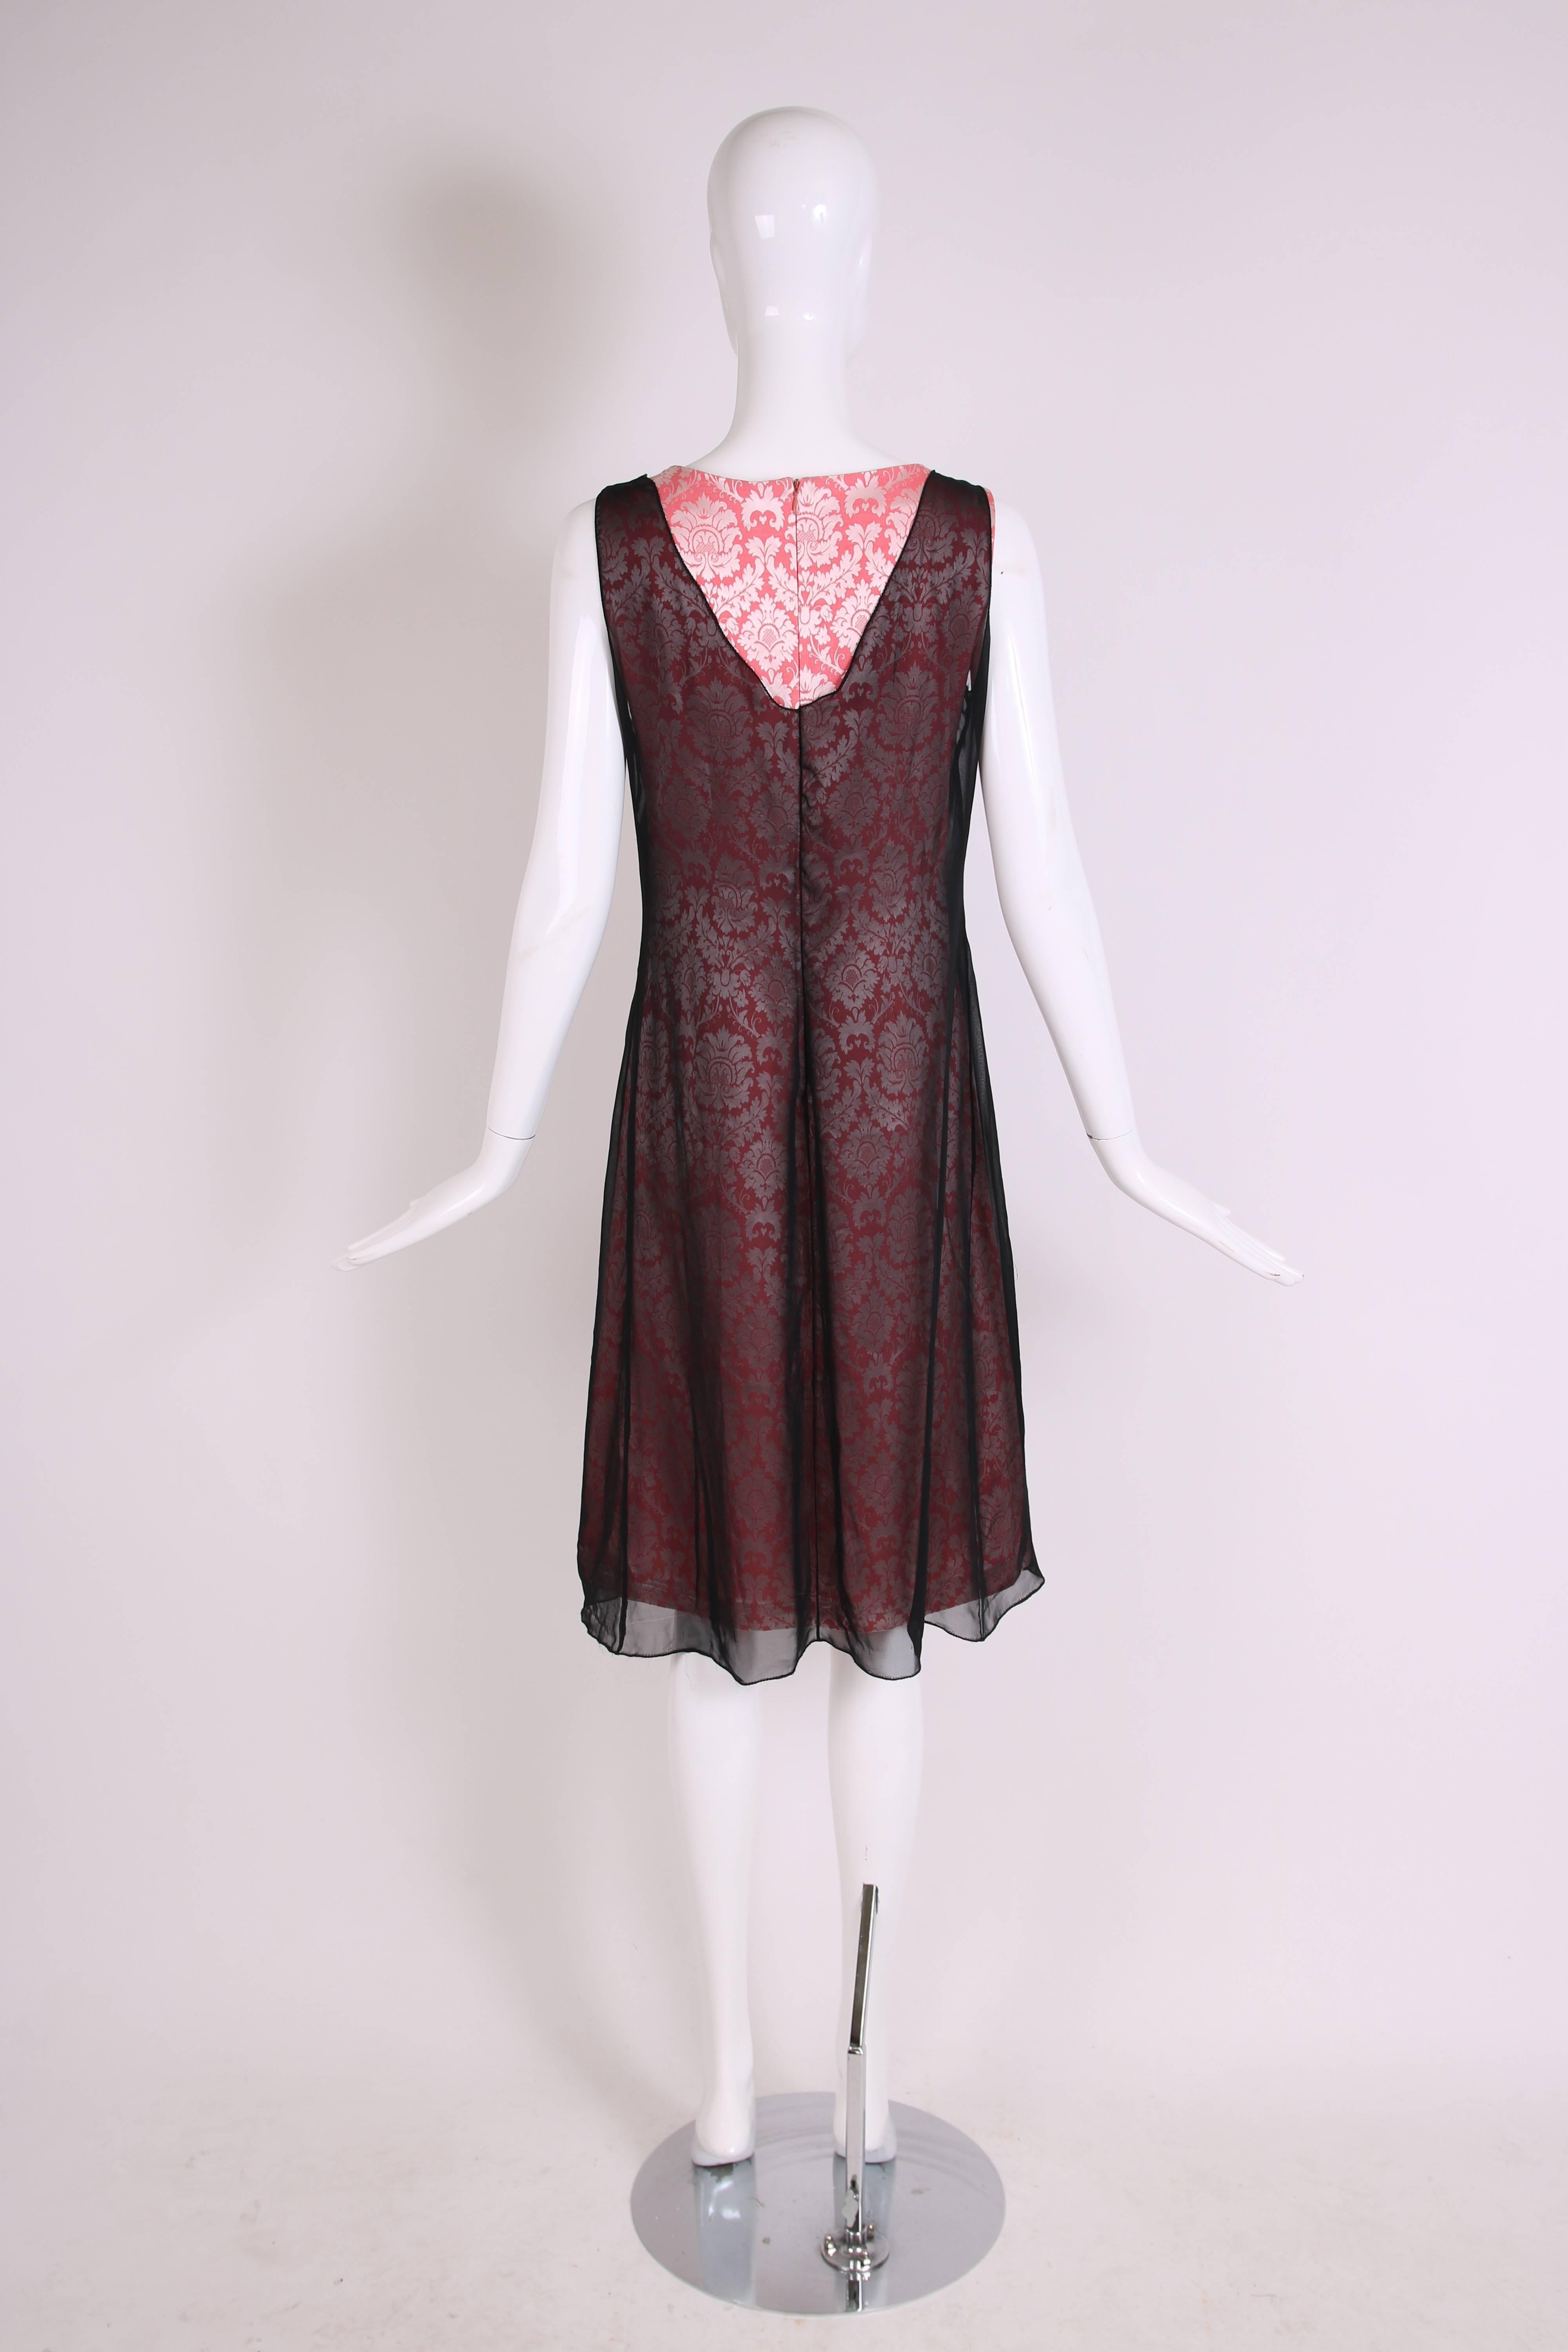 Rare Alexander McQueen Sleeveless Brocade Dress W/Sheer Black Overlay Ca. 1996 For Sale 2